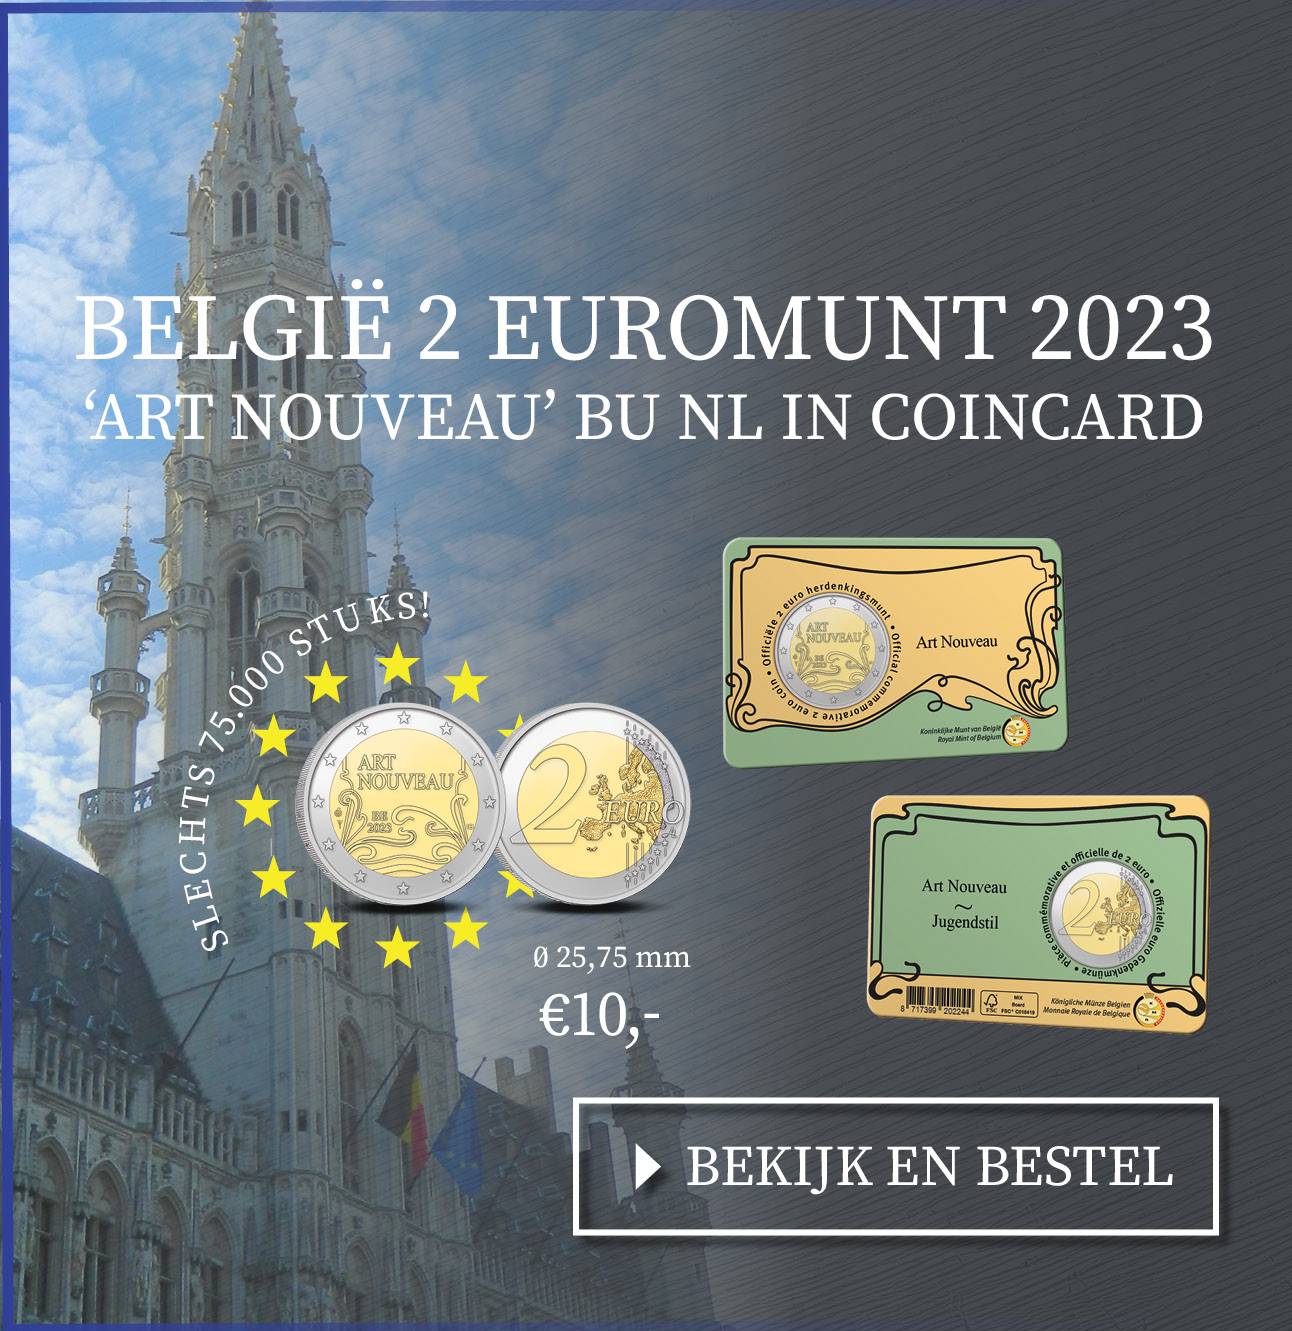 Bekijk en bestel: België 2 euromunt 2023 ‘Art Nouveau’ BU in coincard NL